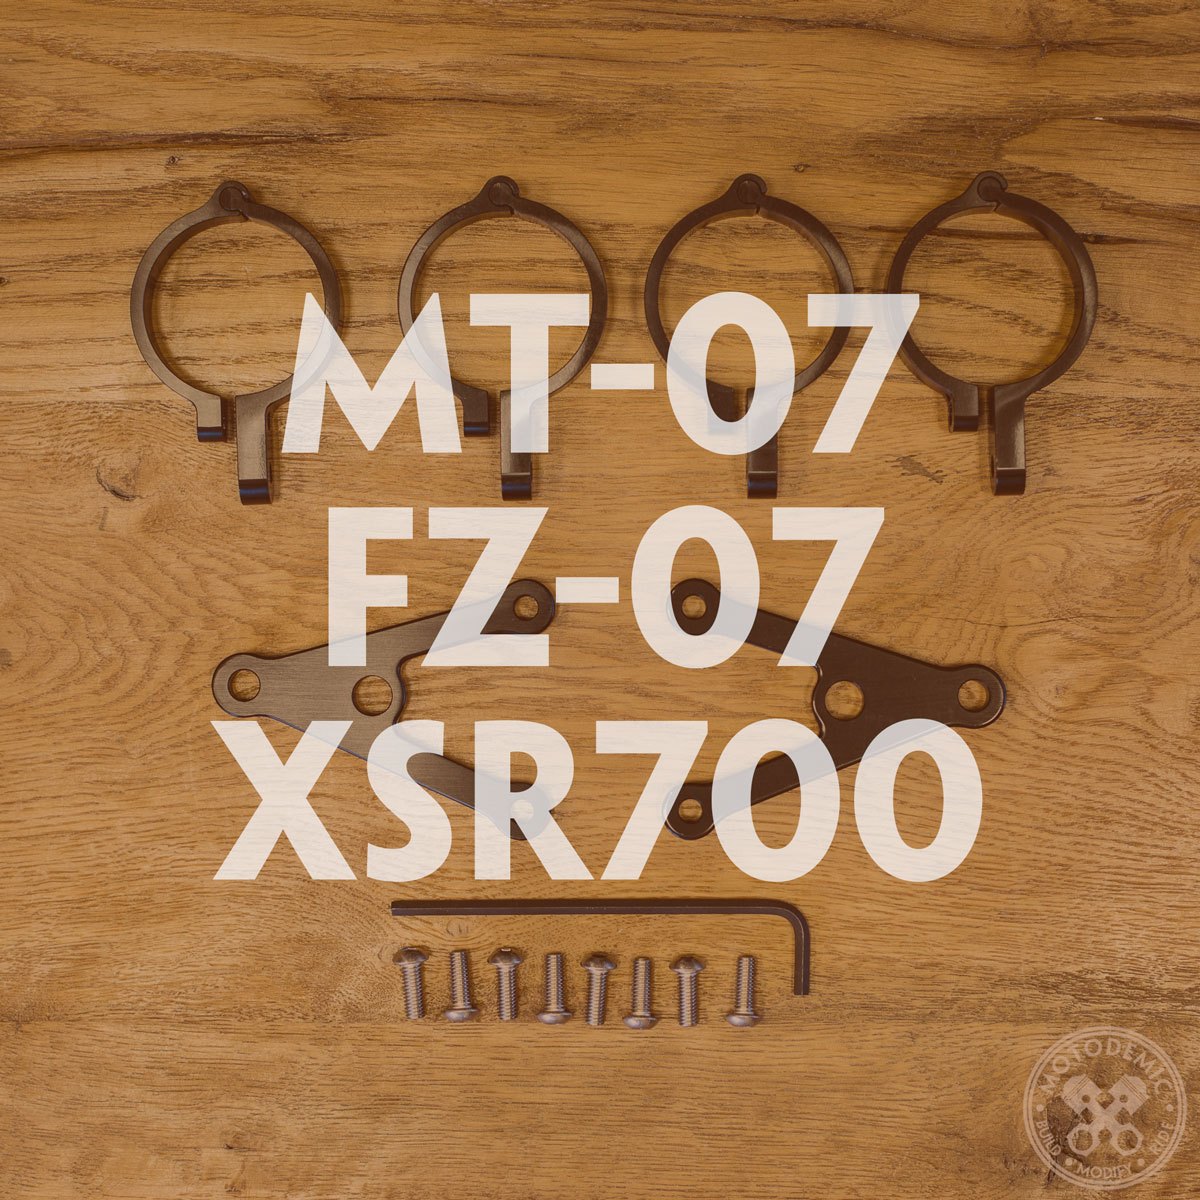 Motodemic Custom Headlight Brackets for Yamaha FZ-07 / MT-07 & XSR700